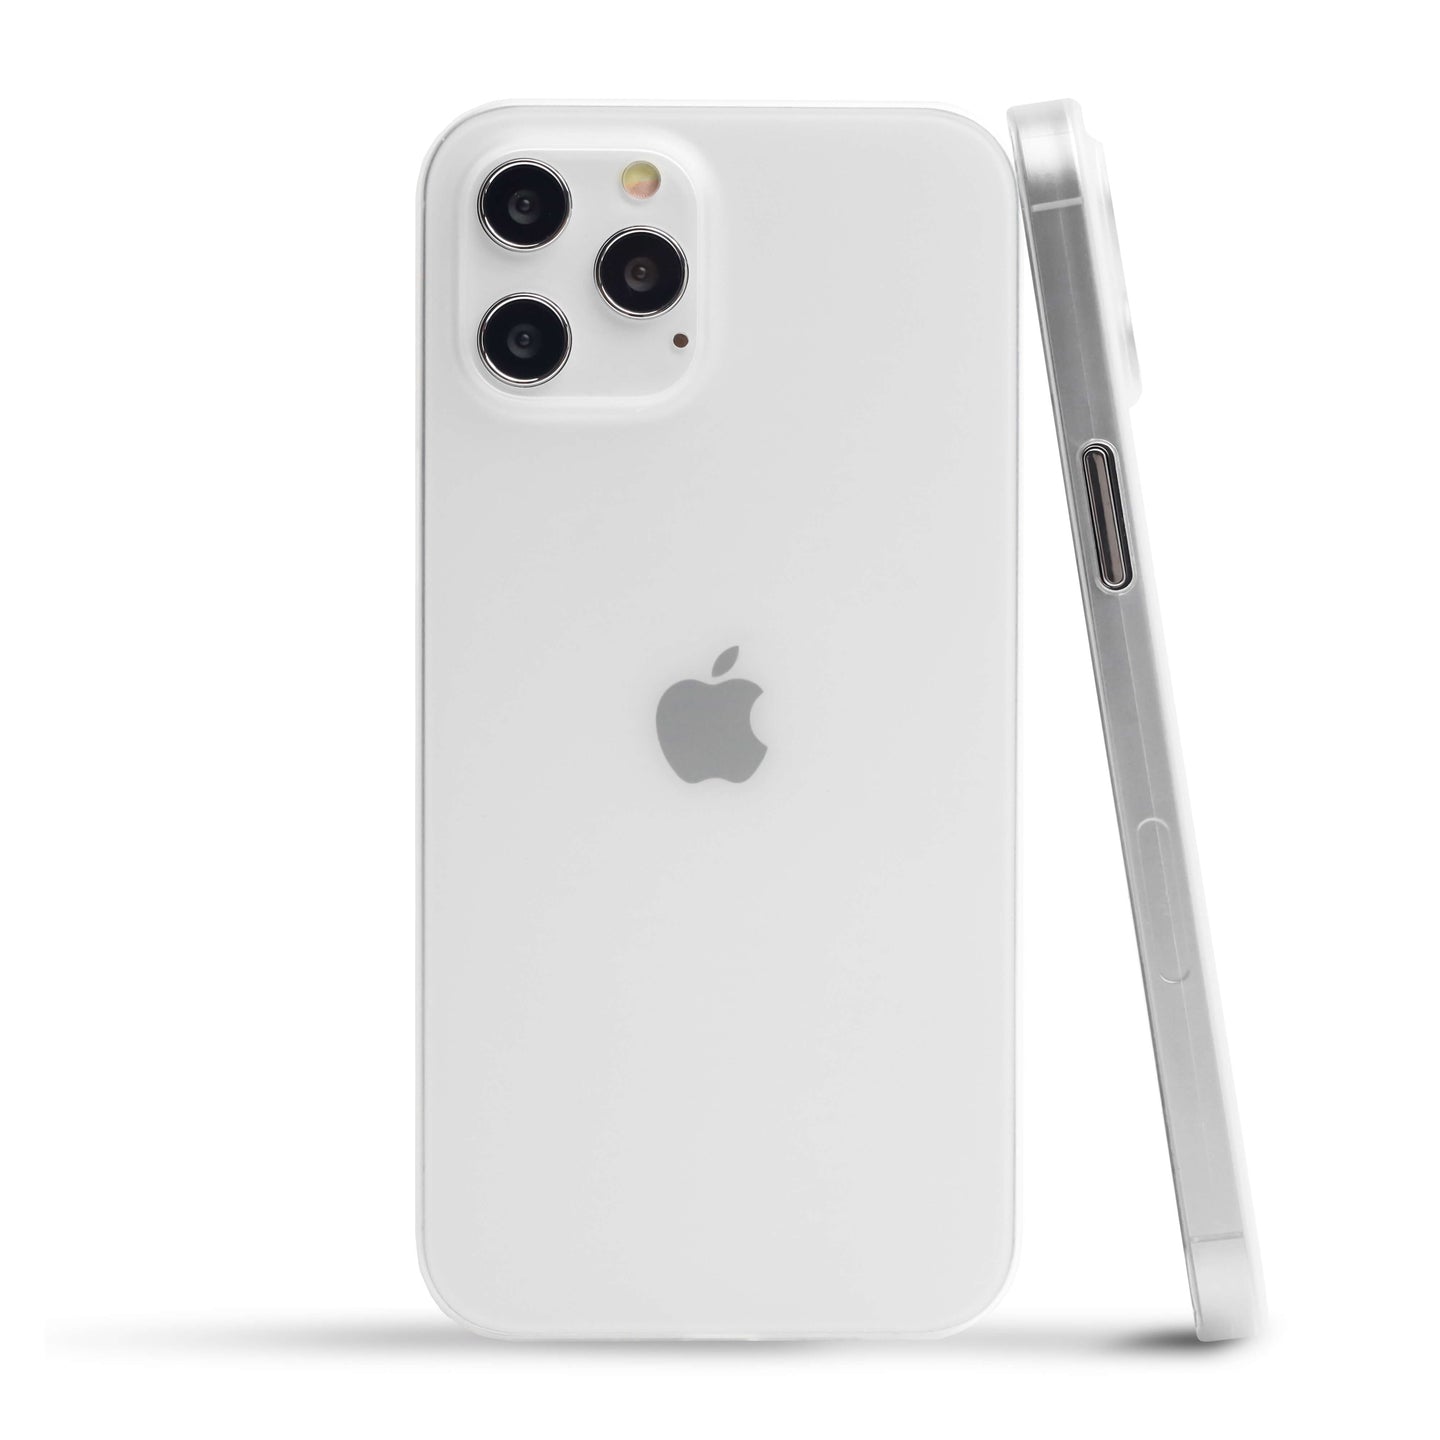 Slim Minimal iPhone 12 Pro Max Case 2.0 & Screen Protector Bundle